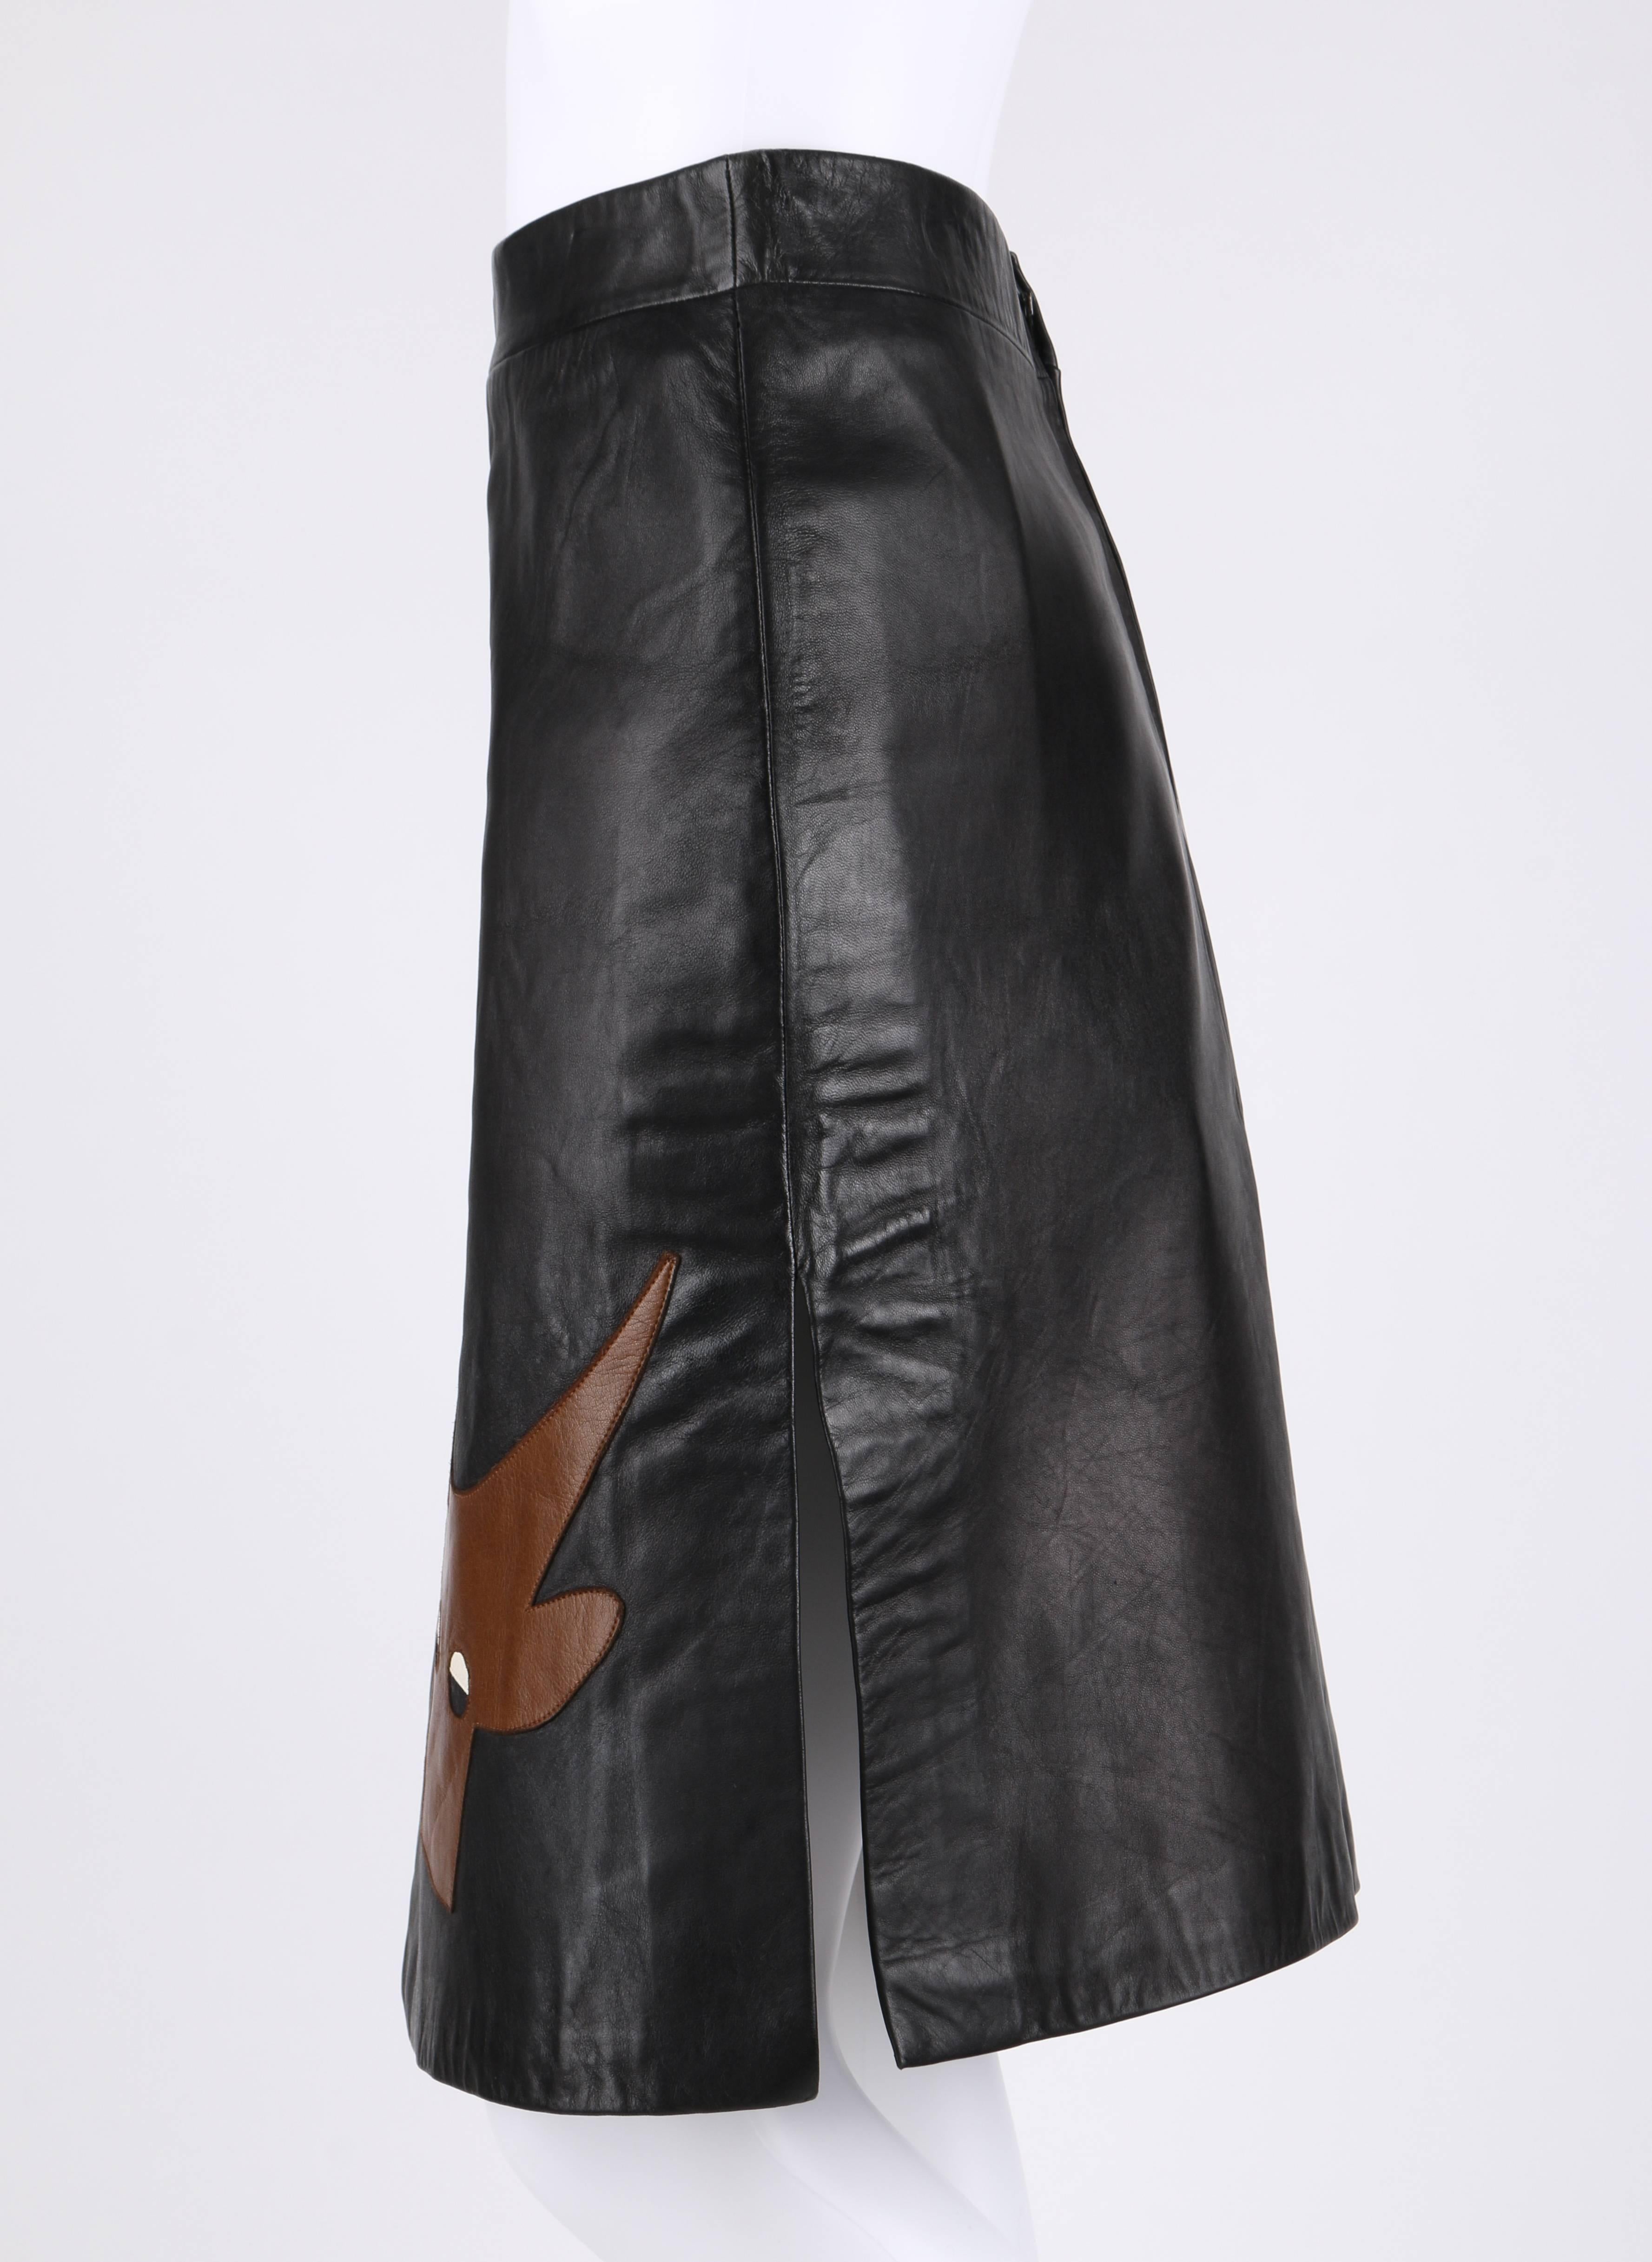 Women's PIERRE CARDIN c.1970's Black Genuine Leather Deer Applique A-line Skirt Size 12